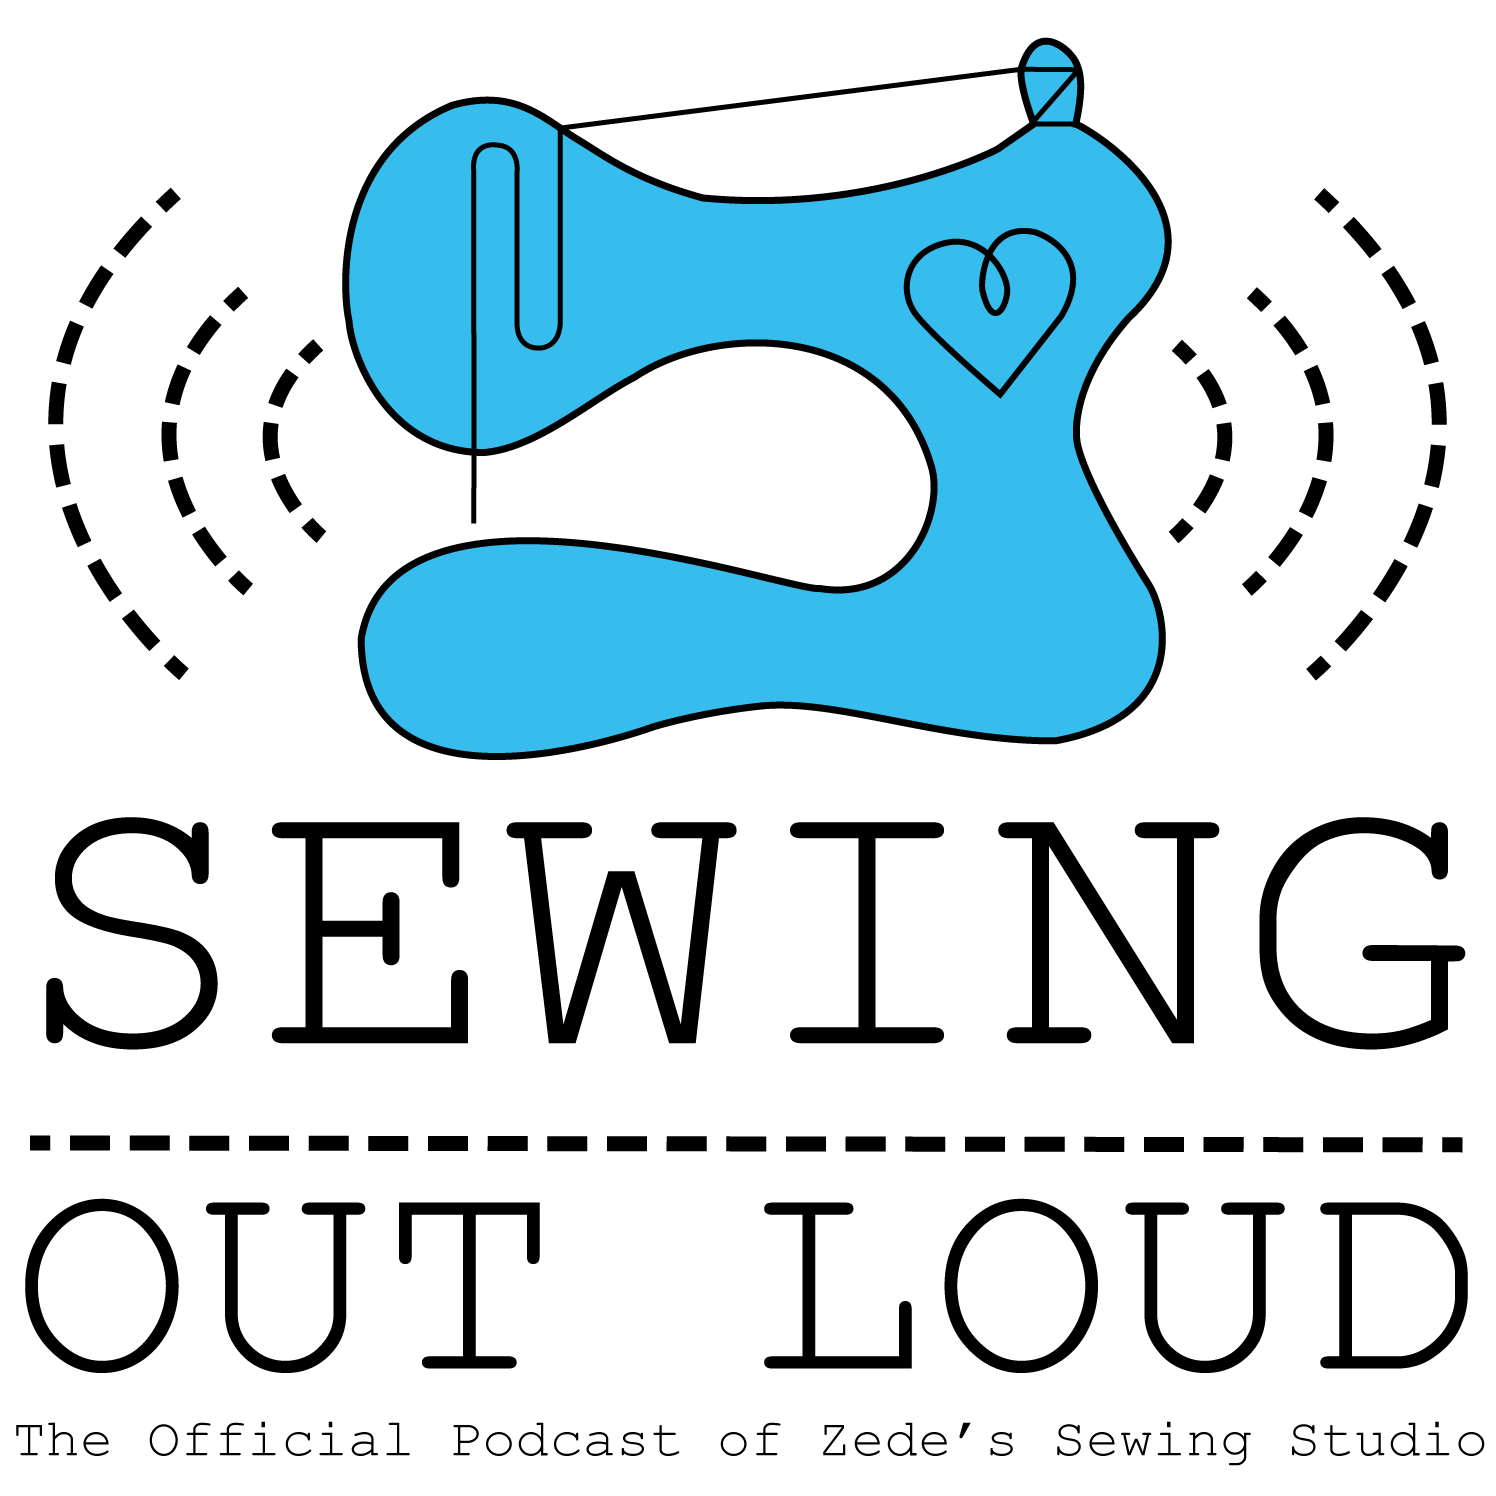 Stay Stitching, Understitching, and Top Stitching